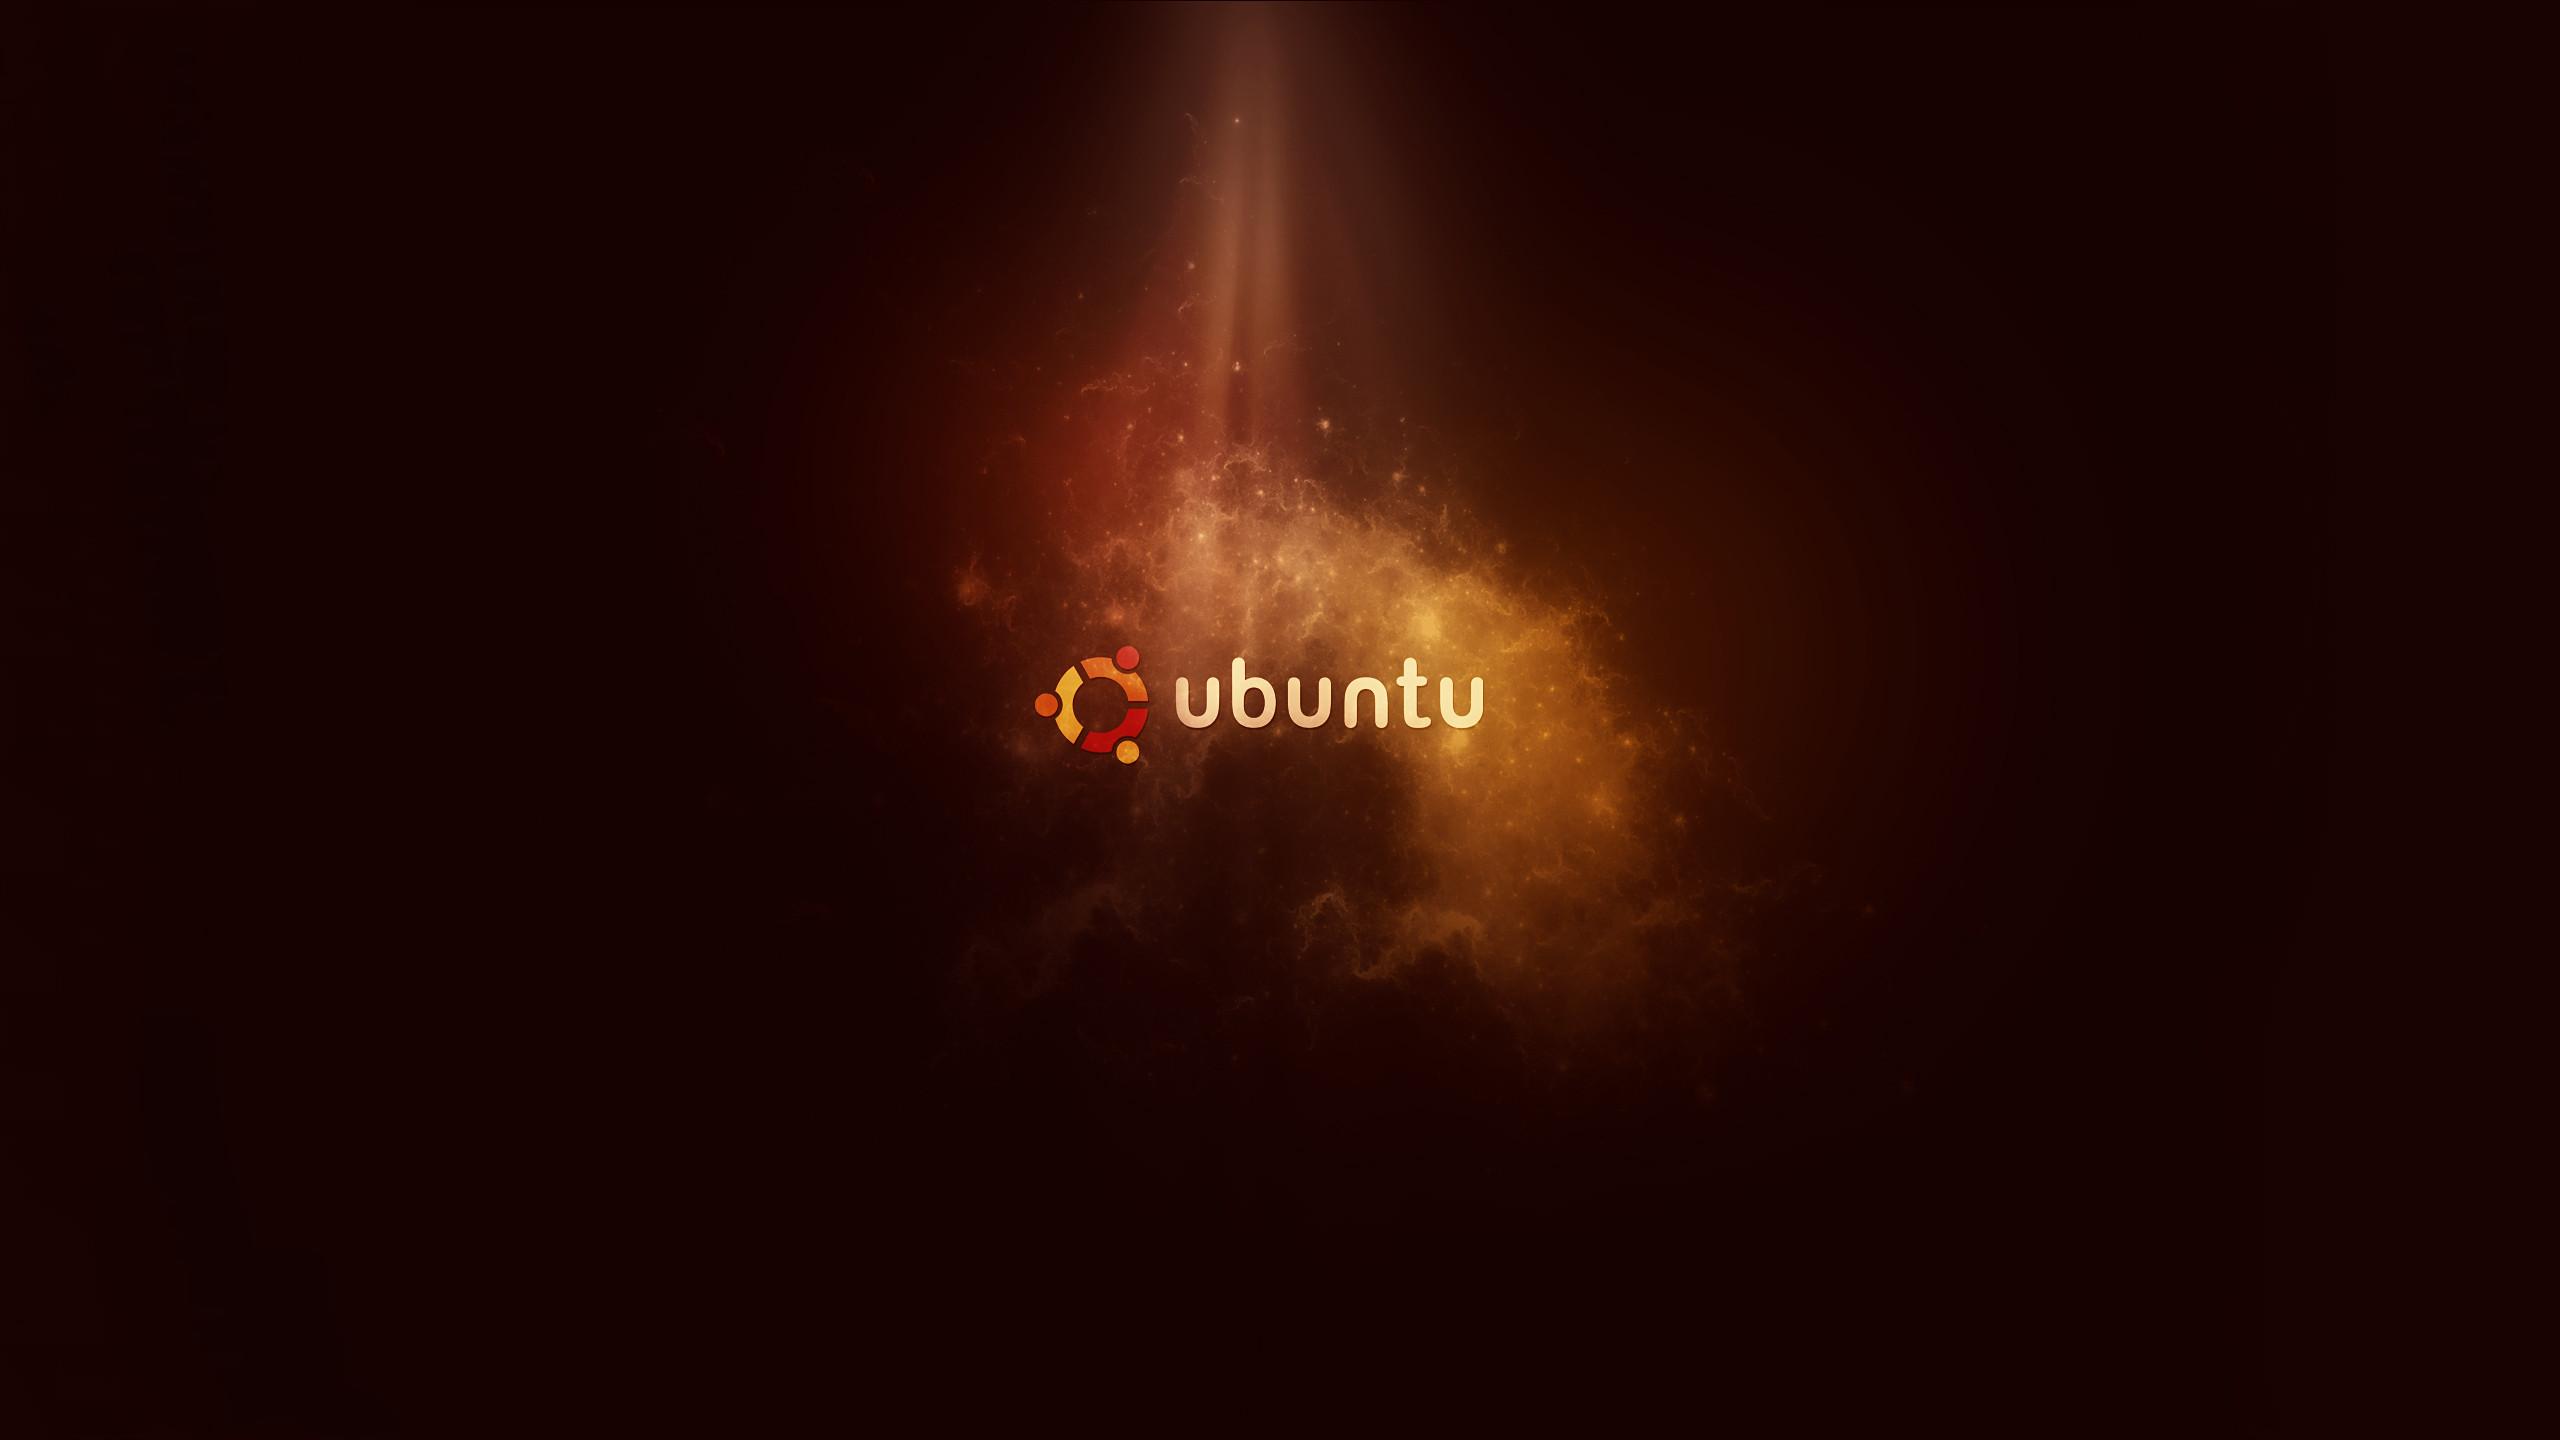 Ubuntu Backgrounds Wallpapers, Backgrounds, Images, Art Photos